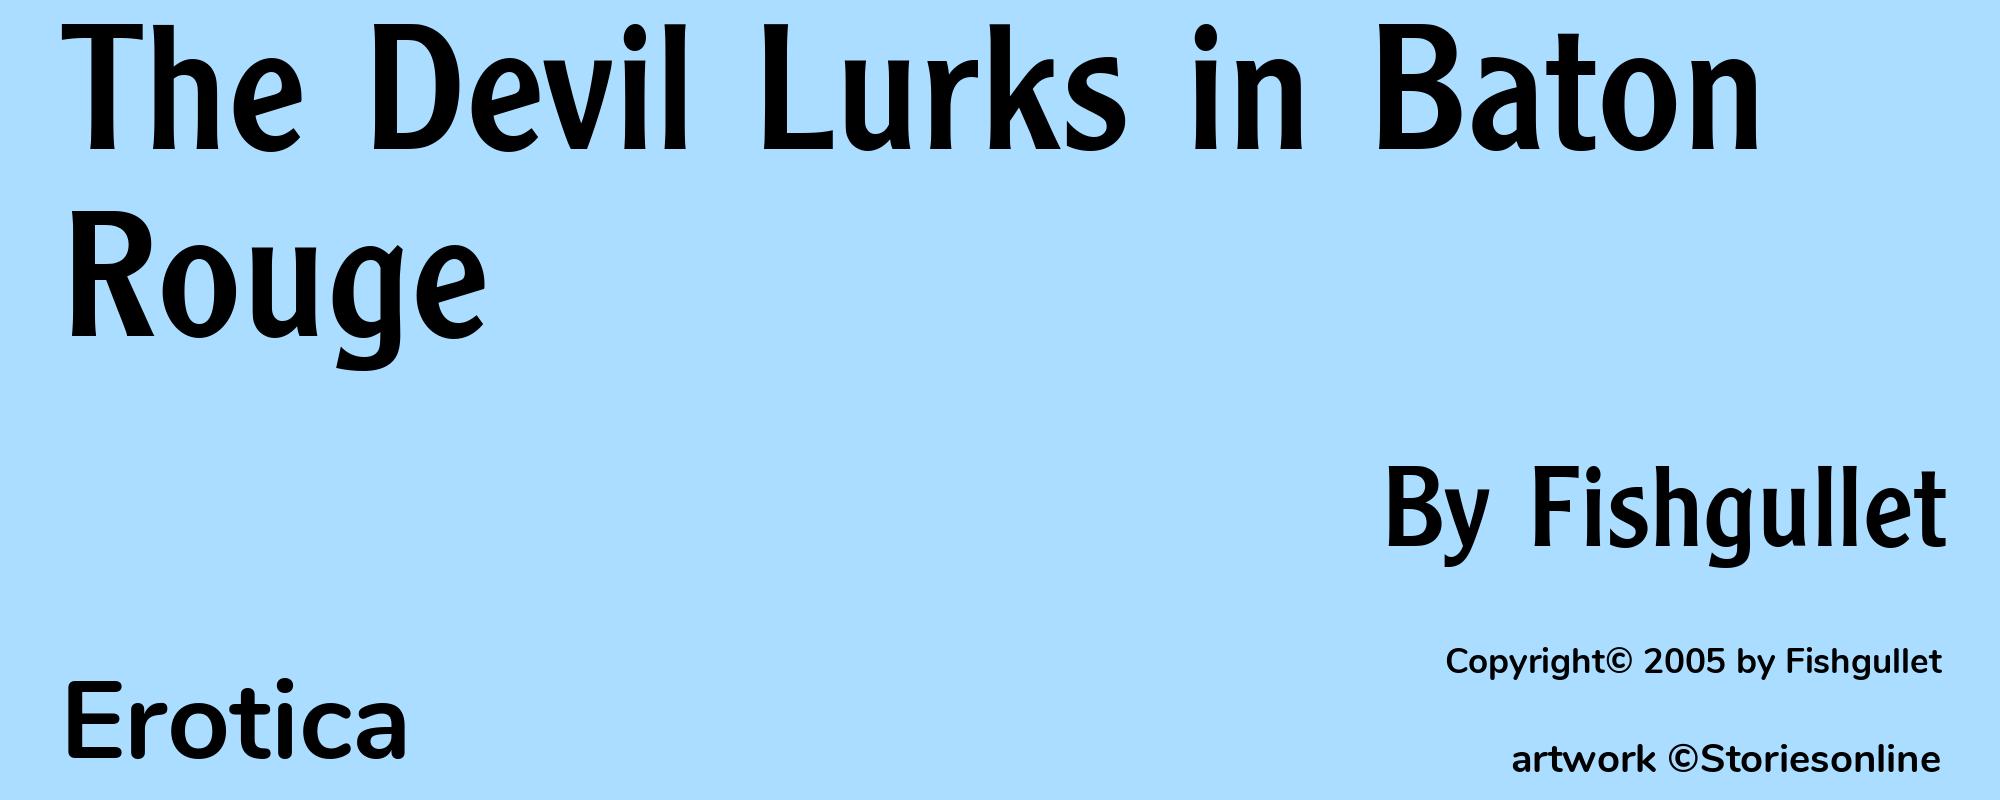 The Devil Lurks in Baton Rouge - Cover